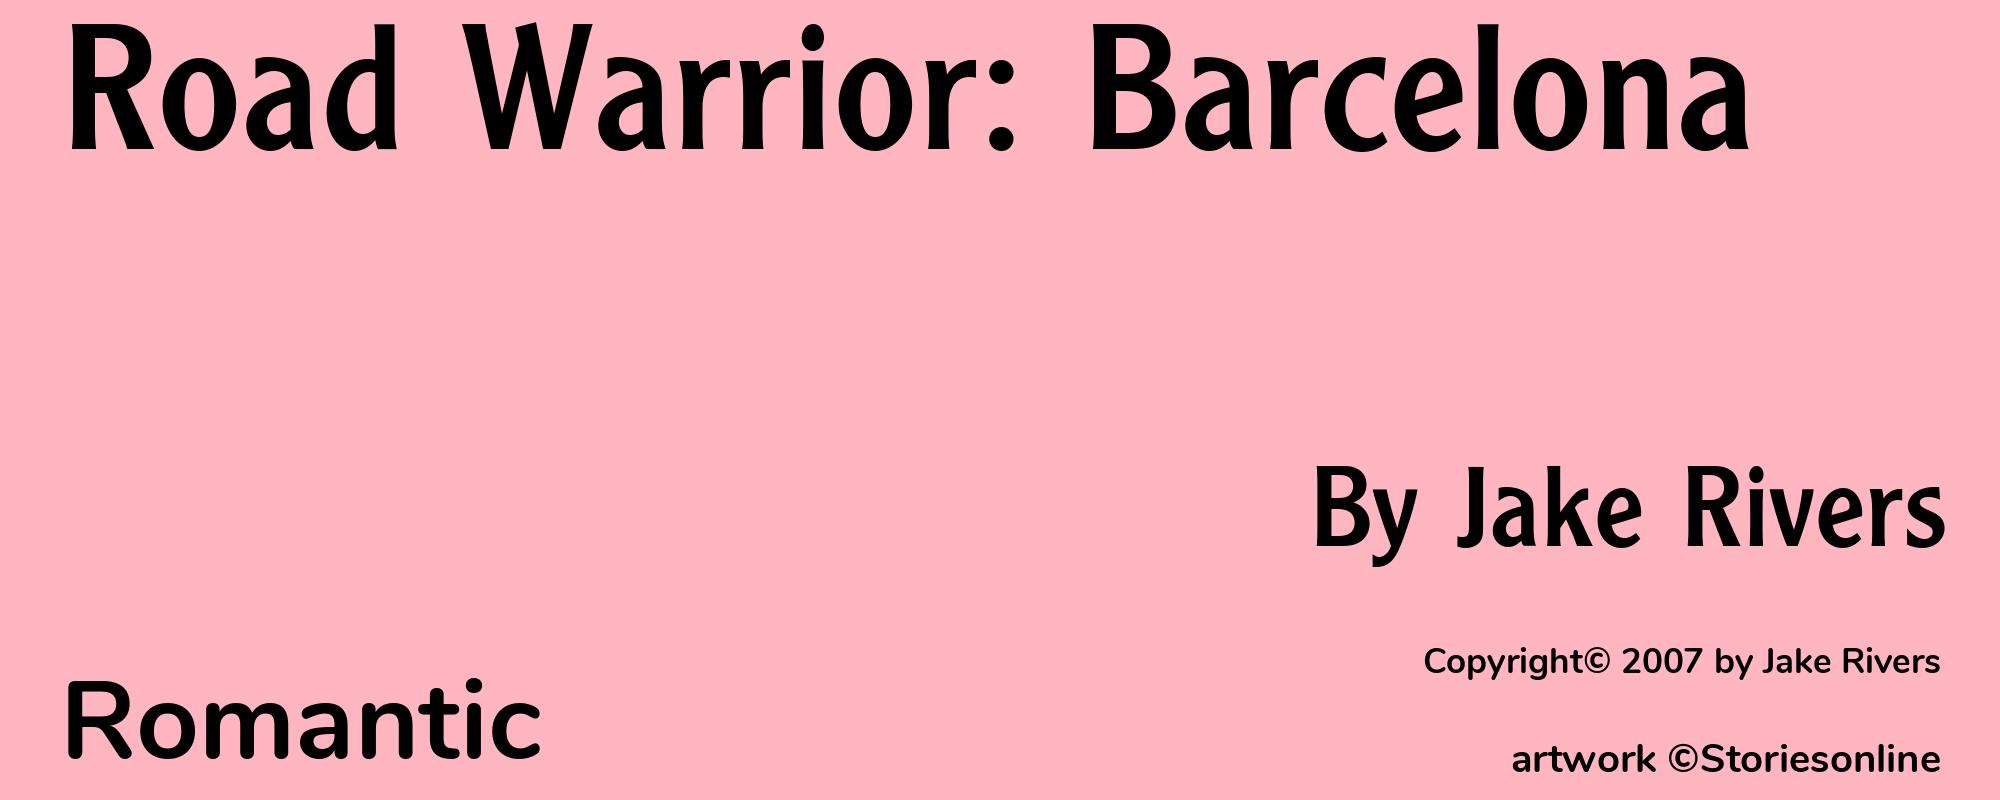 Road Warrior: Barcelona - Cover